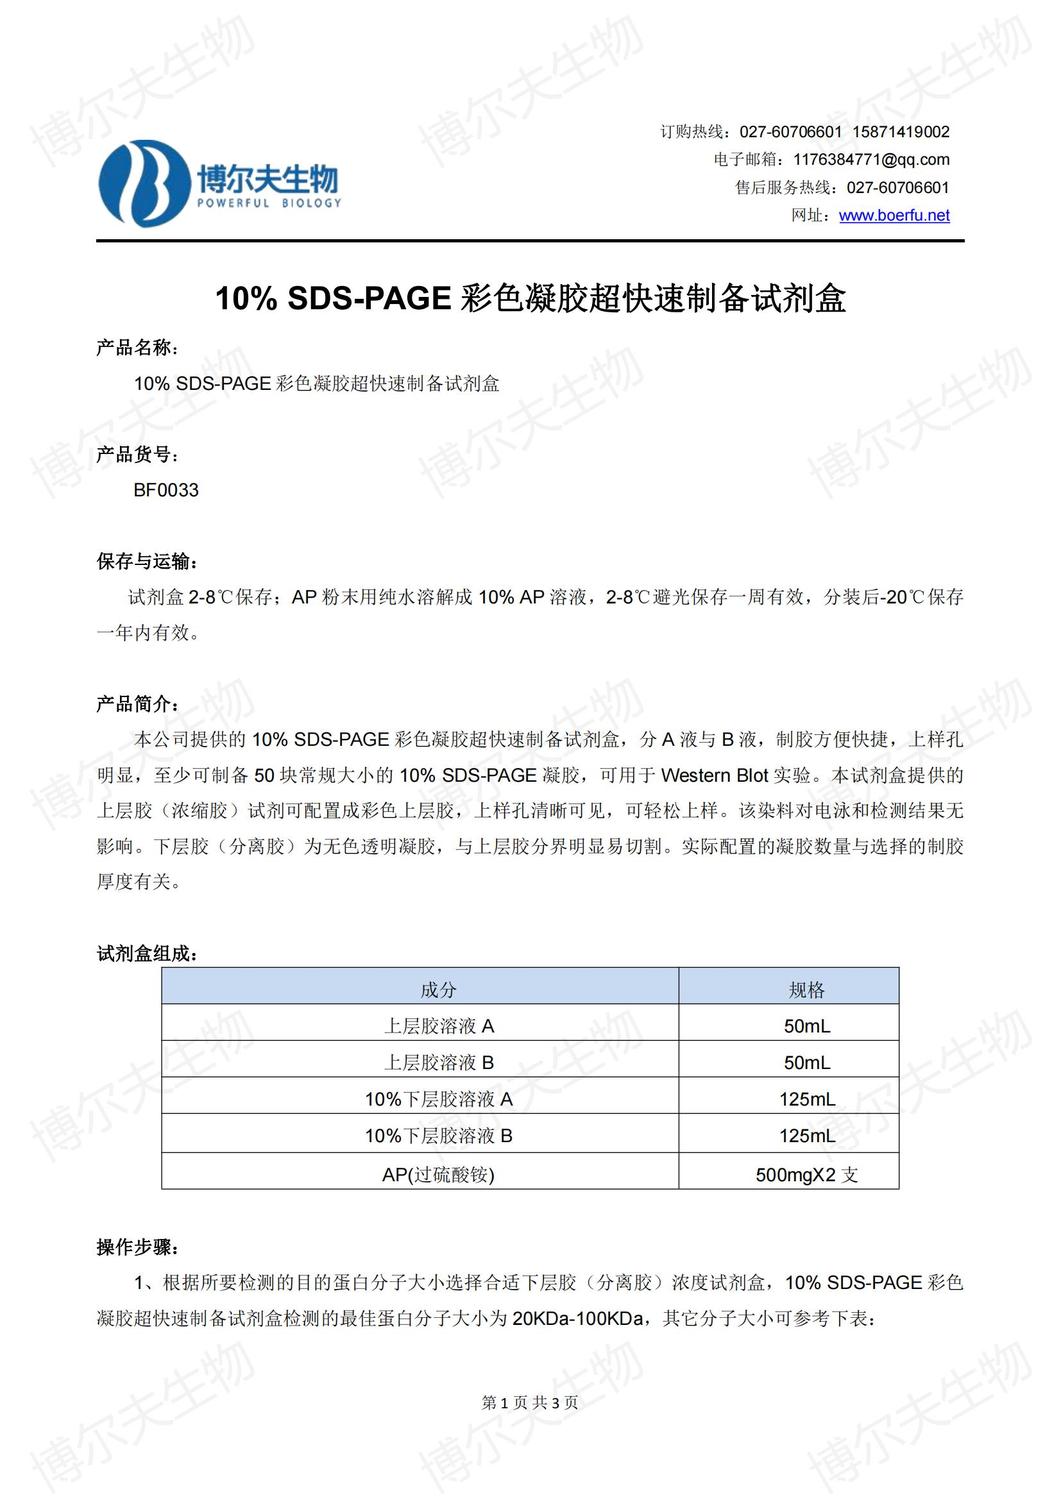 10%SDS-PAGE凝膠快速制備試劑盒說明書20221010版 - 副本_00.jpg